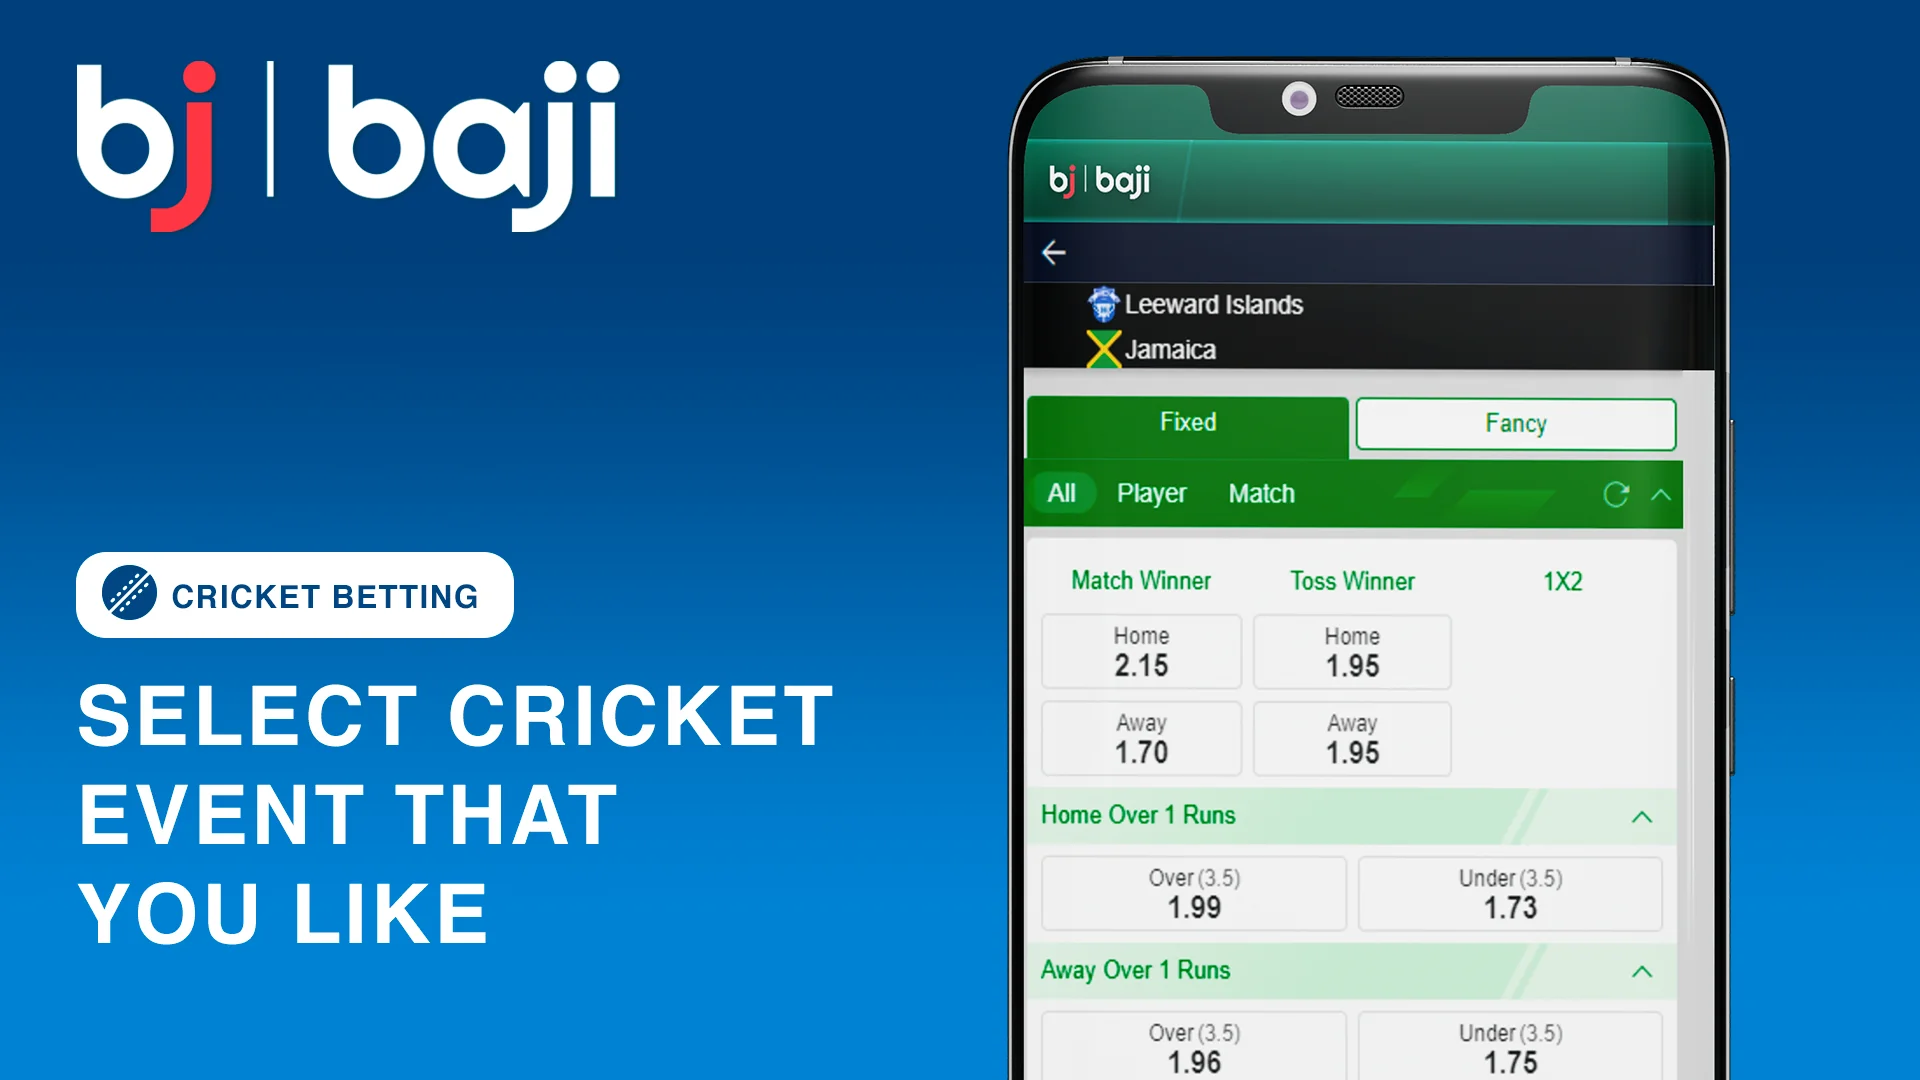 Select Cricket Event that you like to bet on - Baji Bangladesh